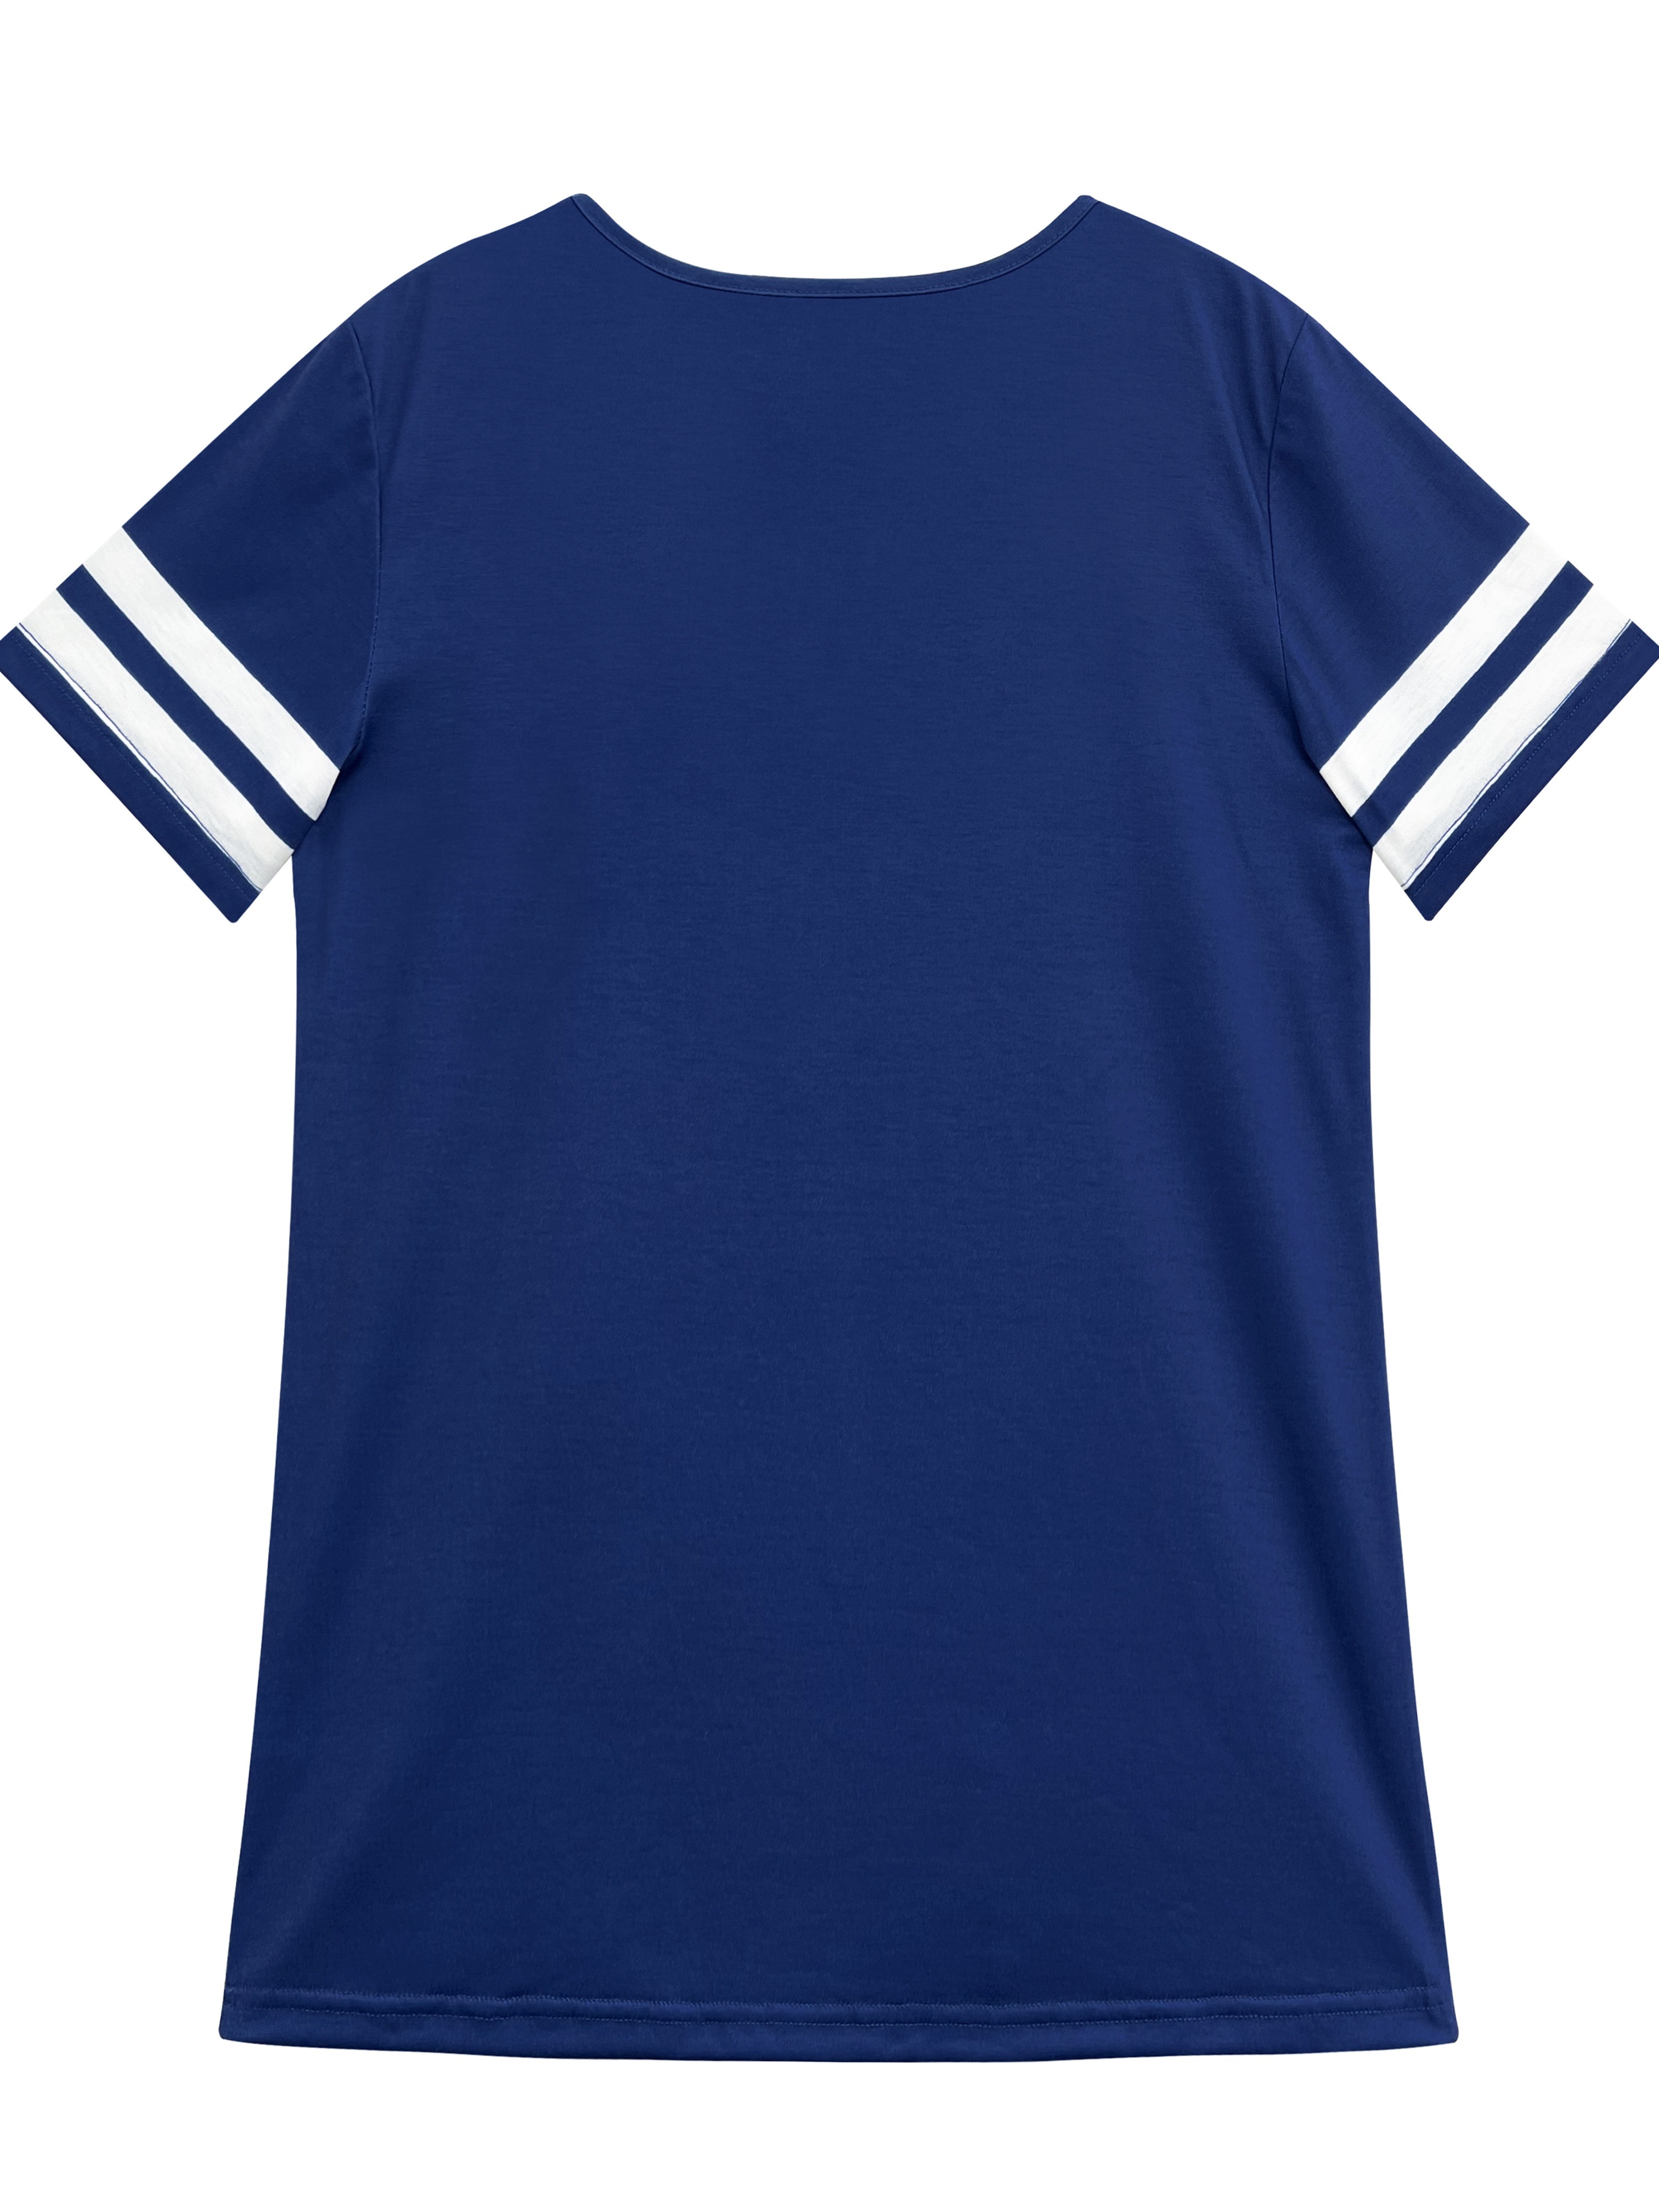 Boat Anchor Print Women's V-Neck T-Shirt Casual Sea Sailor Short Sleeve Top  Blouse Beach Vacation T Shirt